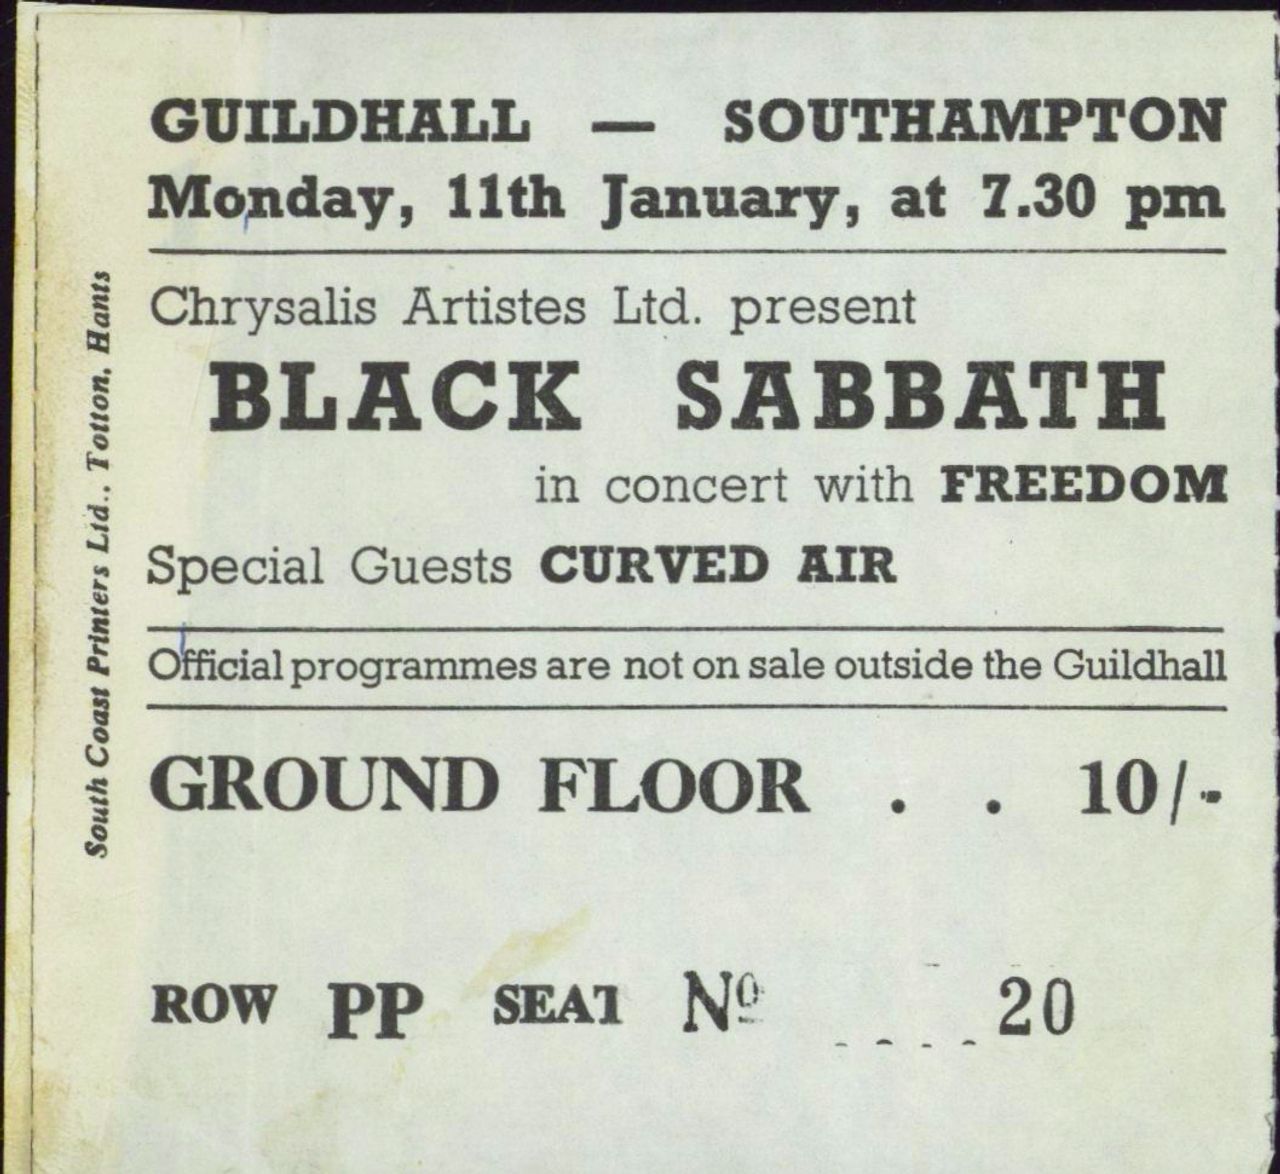 Black Sabbath Guildhall Southampton 1971 UK concert ticket TICKET